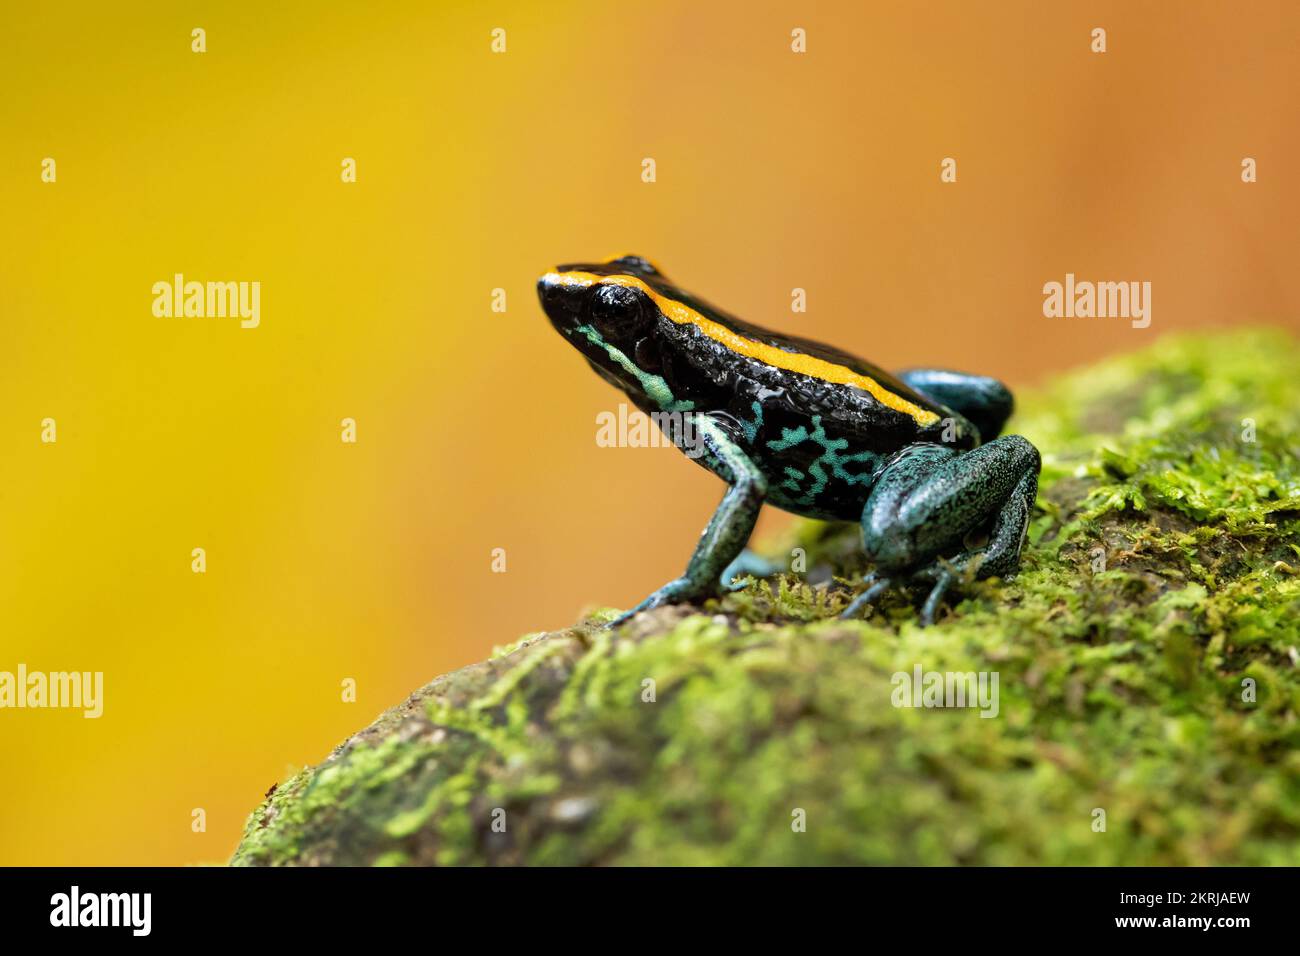 Golfodulcean poison frog Stock Photo